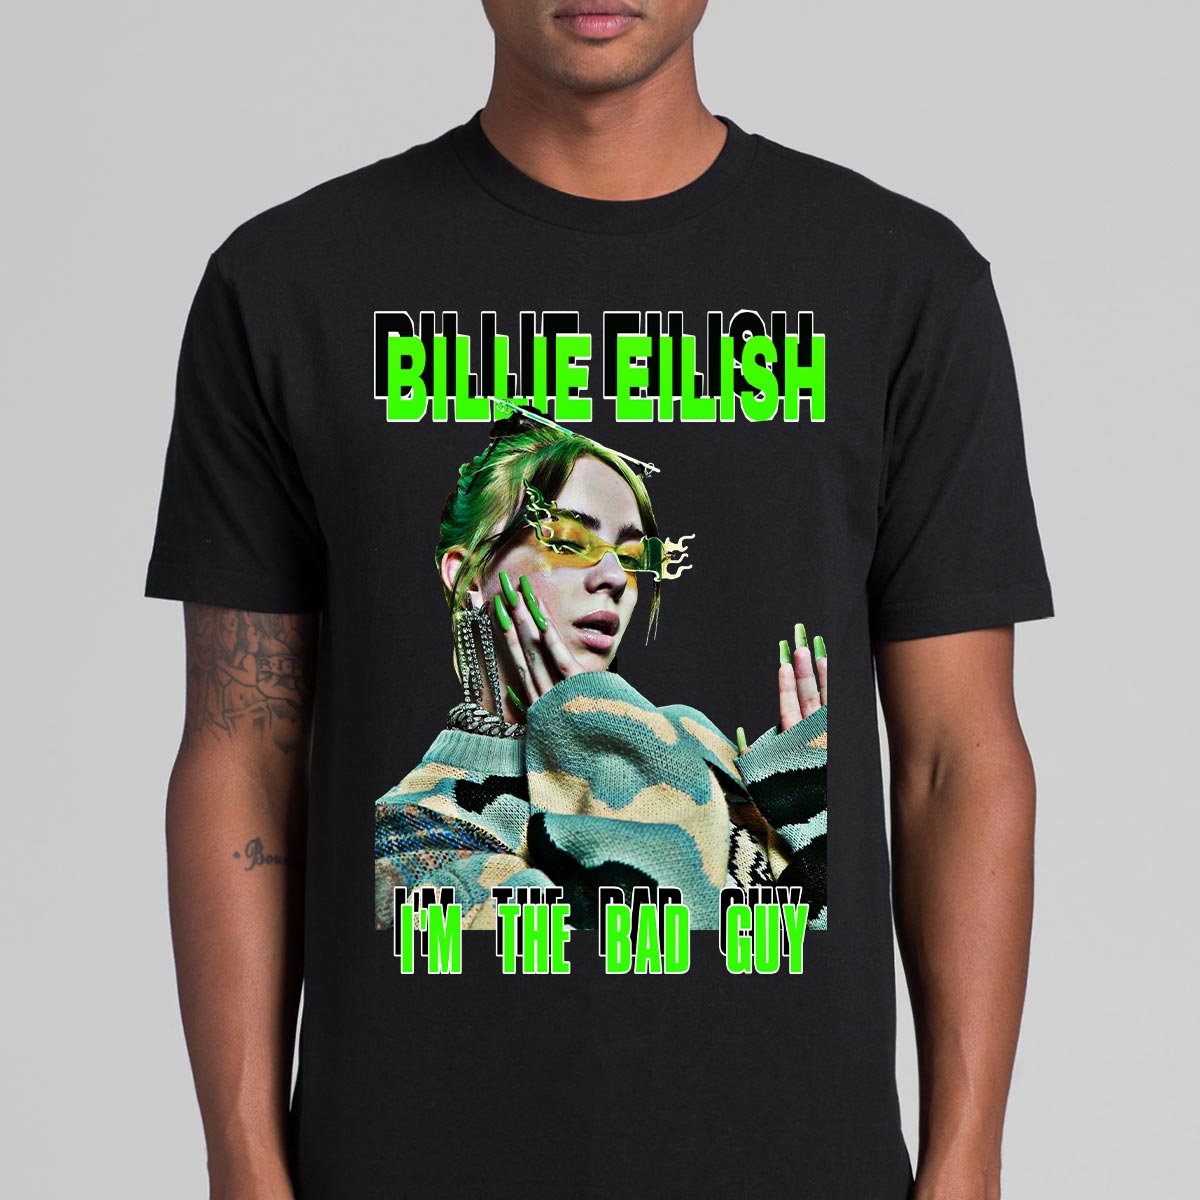 Billie Eilish The Bad Guy T-Shirt Artist Family Fan Music Pop Culture